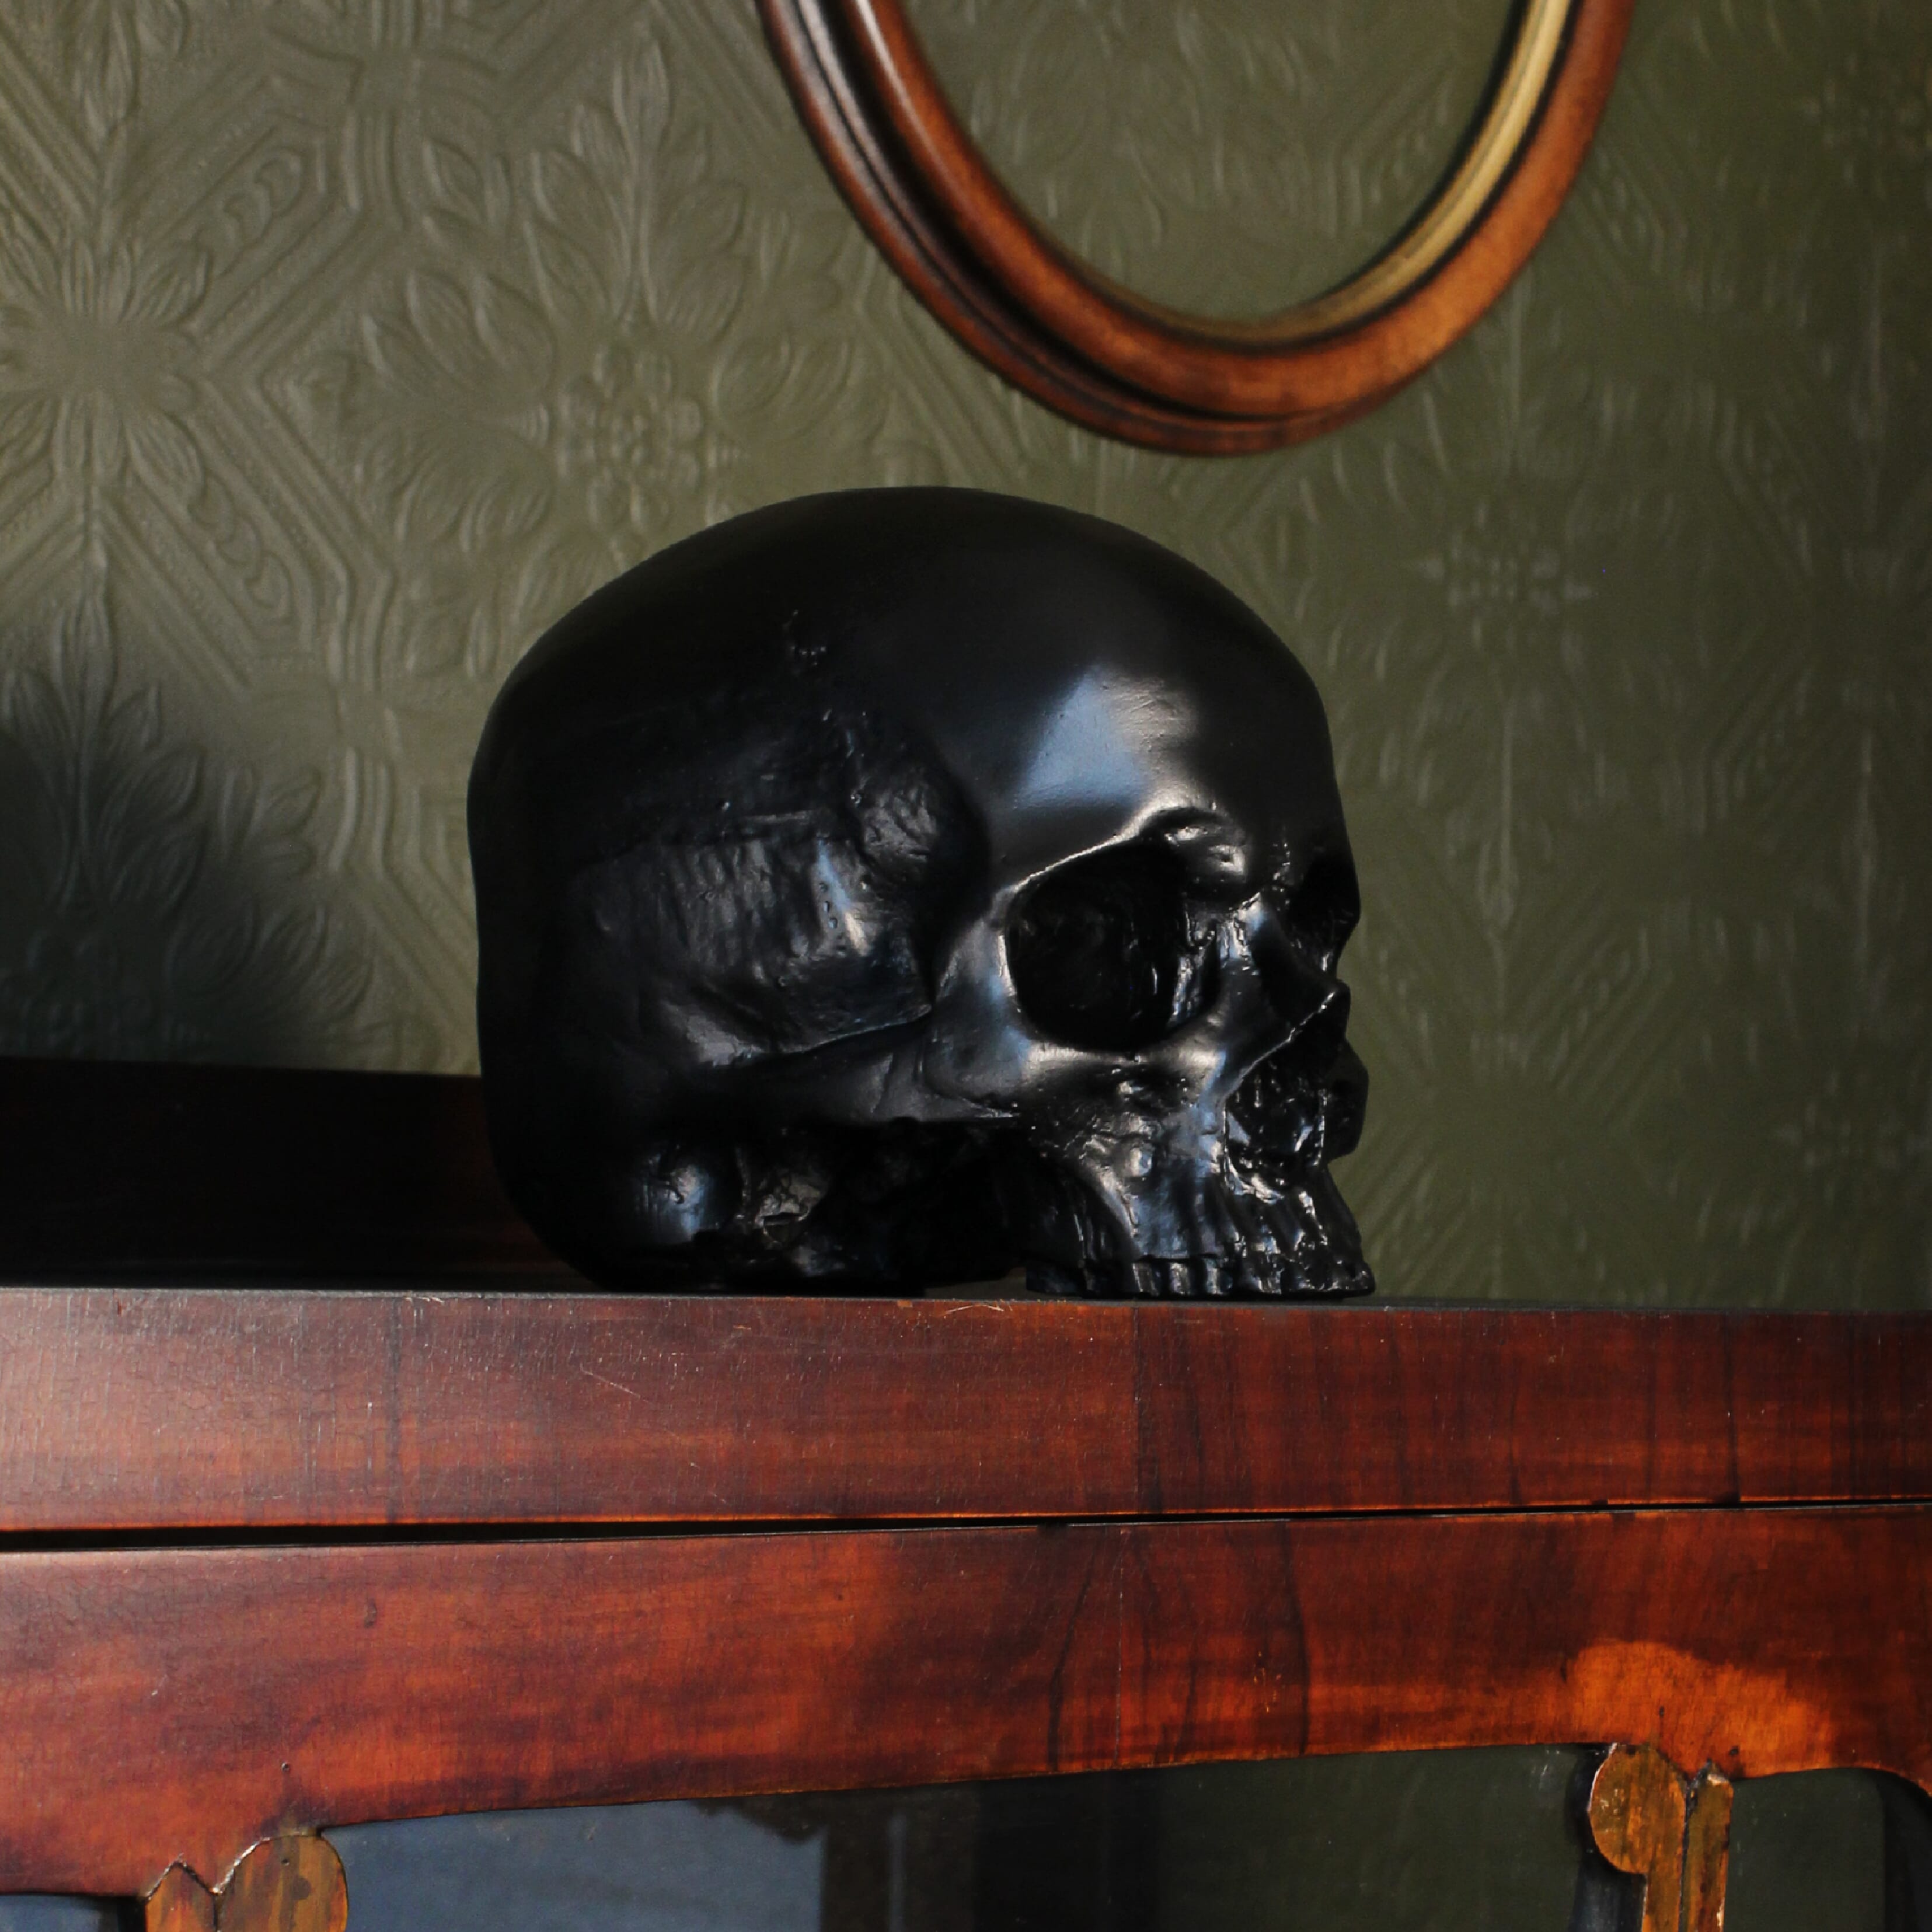 Human skull ornament - gothic decor - the blackened teeth